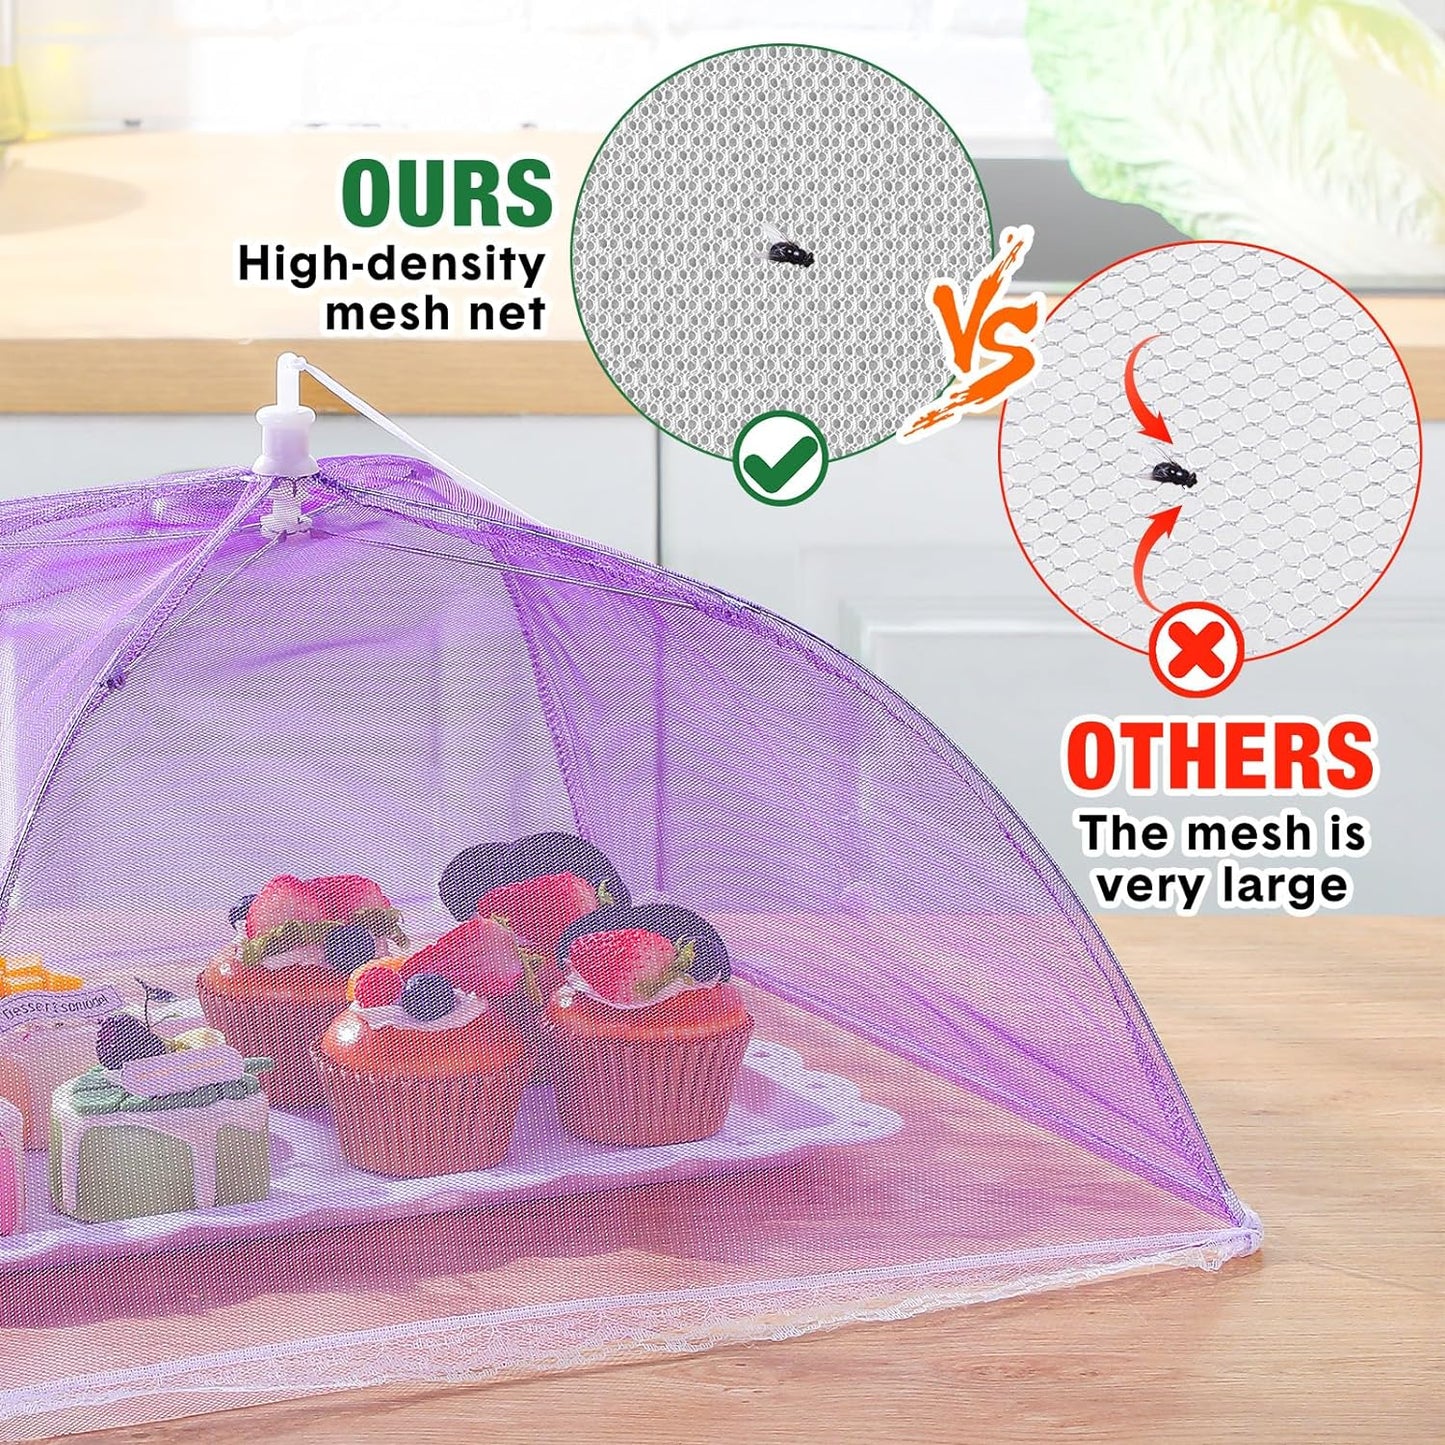 16 Pcs Mesh Food Cover Food Tent Set Reusable Collapsible Pop up Food Nets for Outdoors Summer Party Picnic, 2 Pcs 40" x 24", 4 Pcs 17" x 17", 5 Pcs 14" x 14", 5 Pcs 12" x 12" (Colorful)